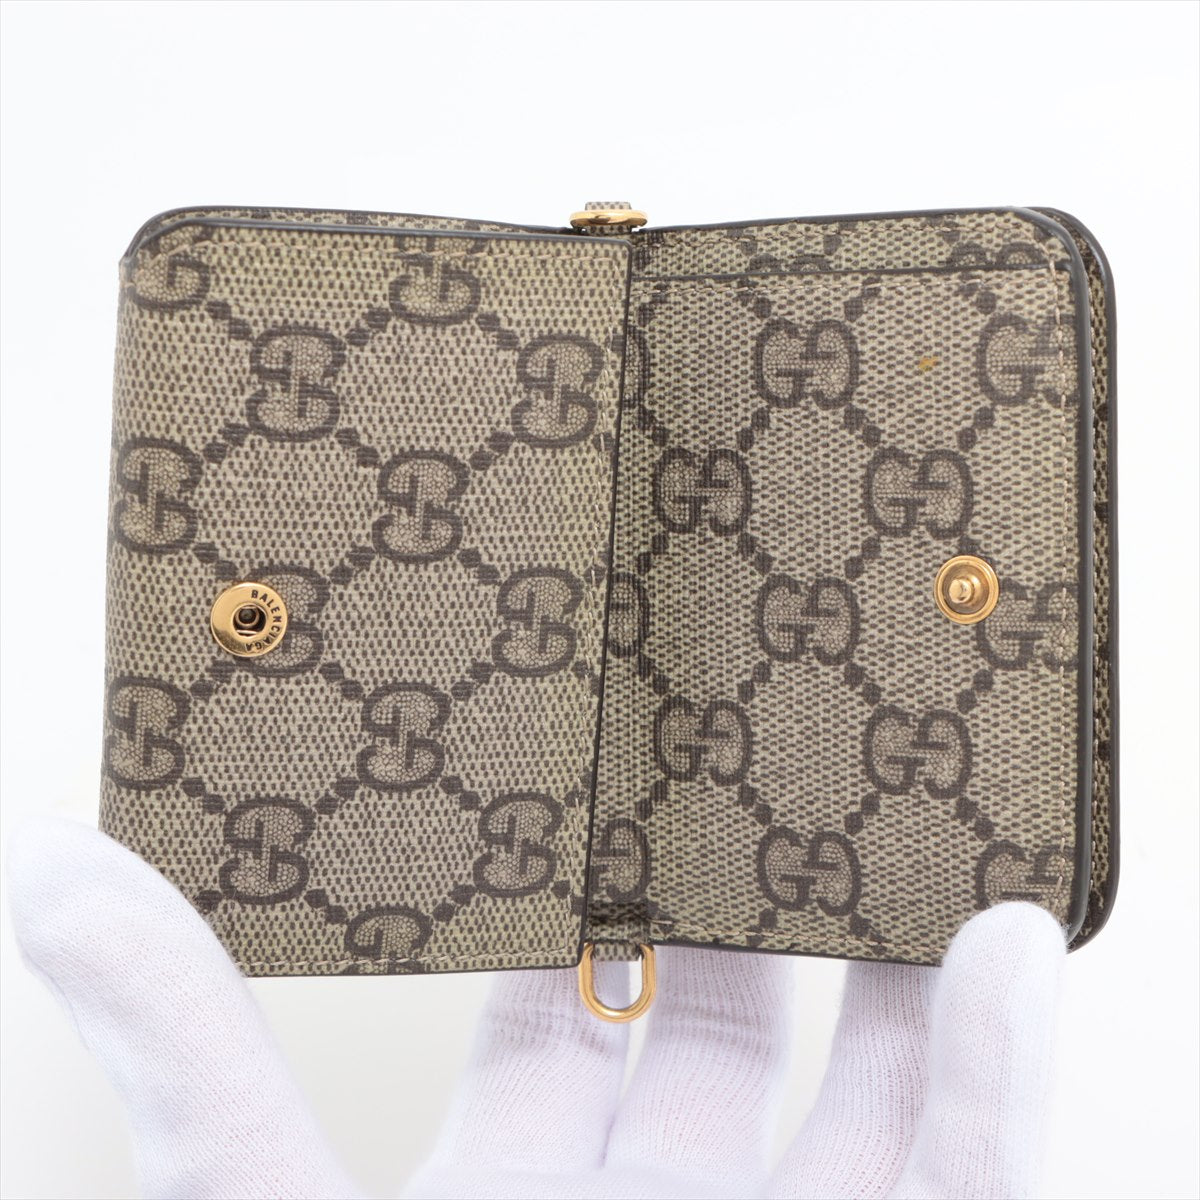 Gucci x Balenciaga GG Supreme PVC & leather Compact Wallet Beige 681705 No chain